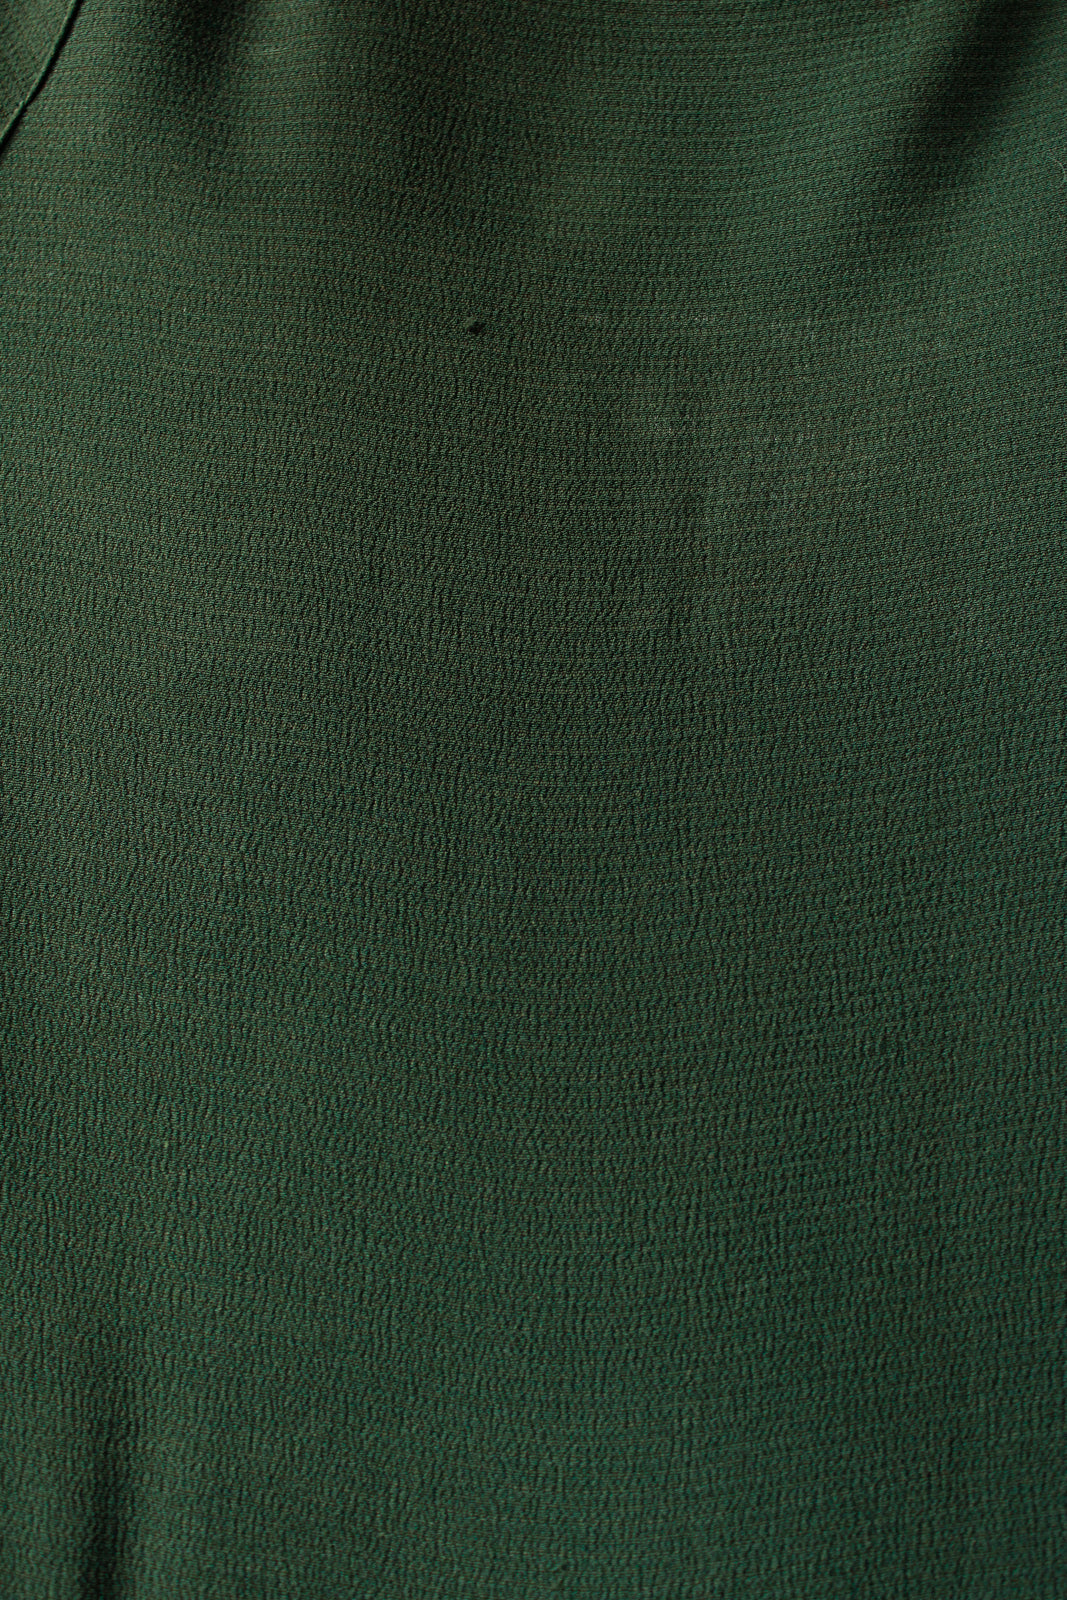 1930s Dark Green Rayon Dress - Small